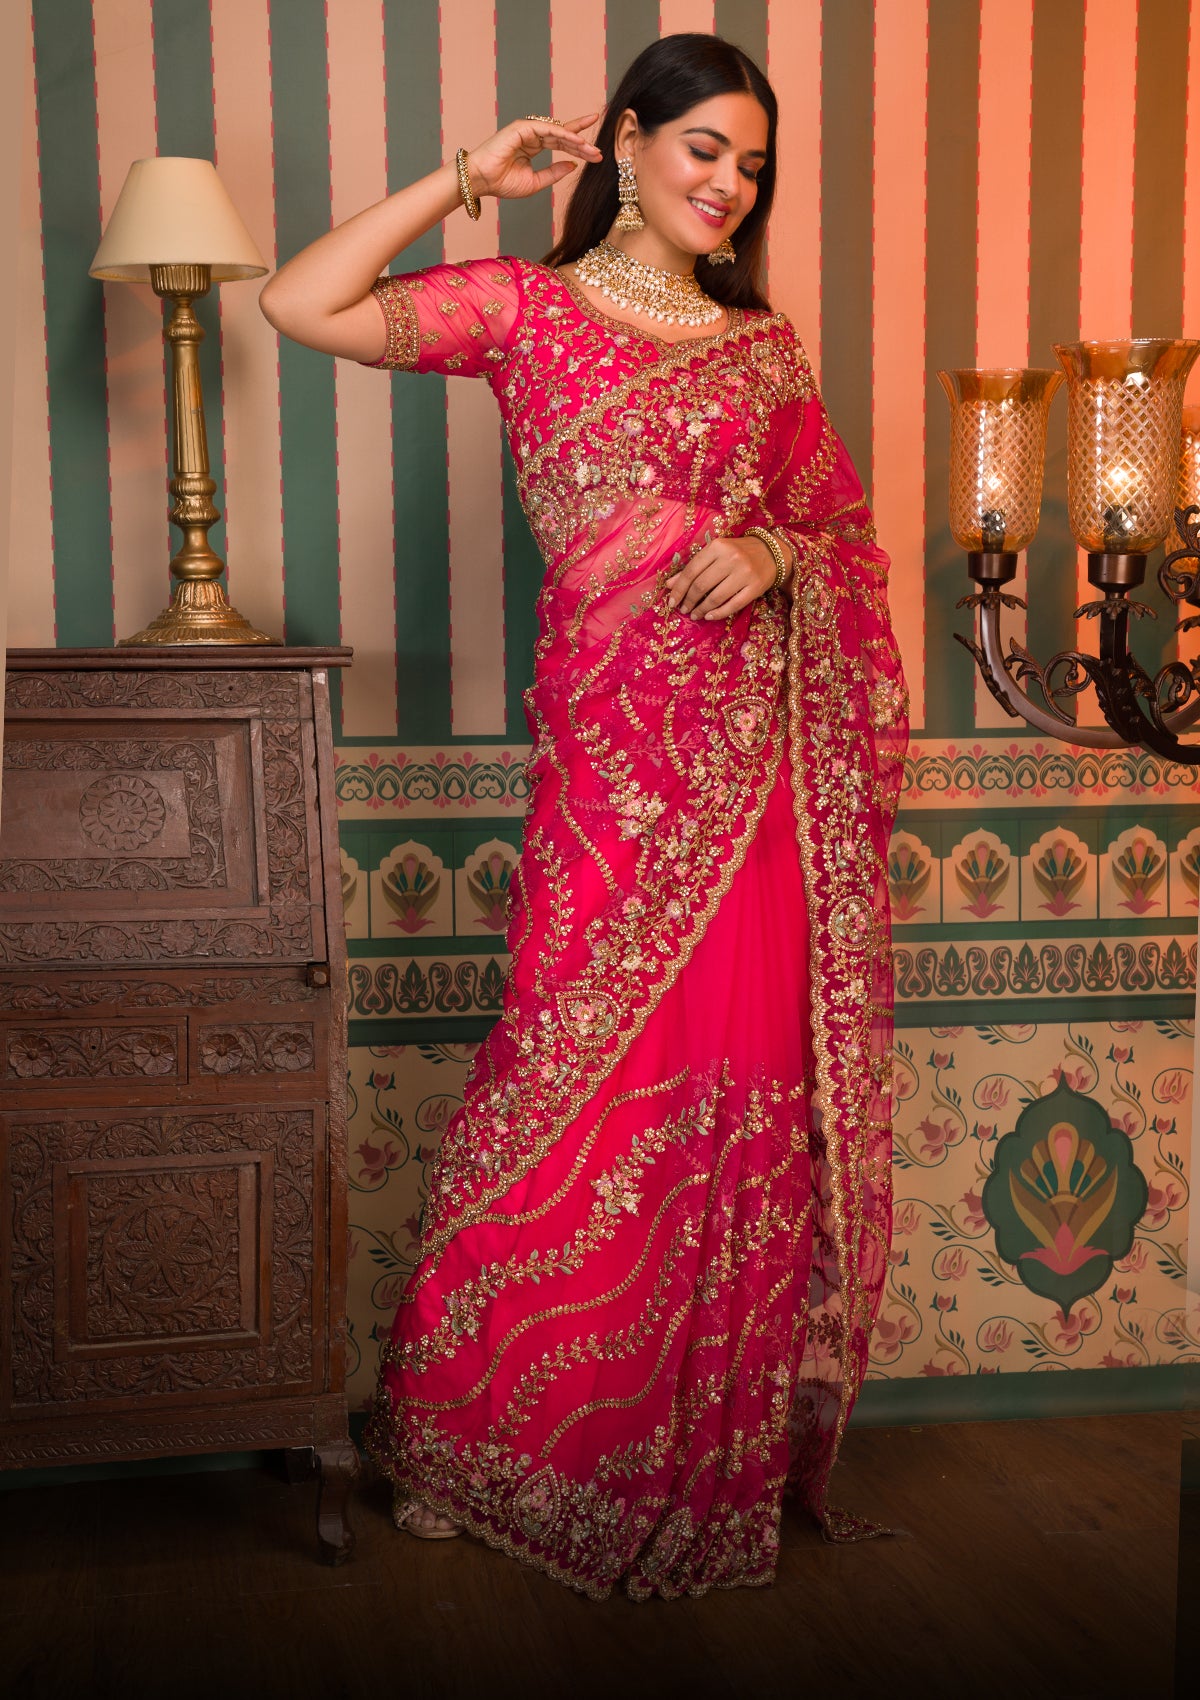 Buy now! 5 Wedding Saree Collection Colours For Each Modern Bride